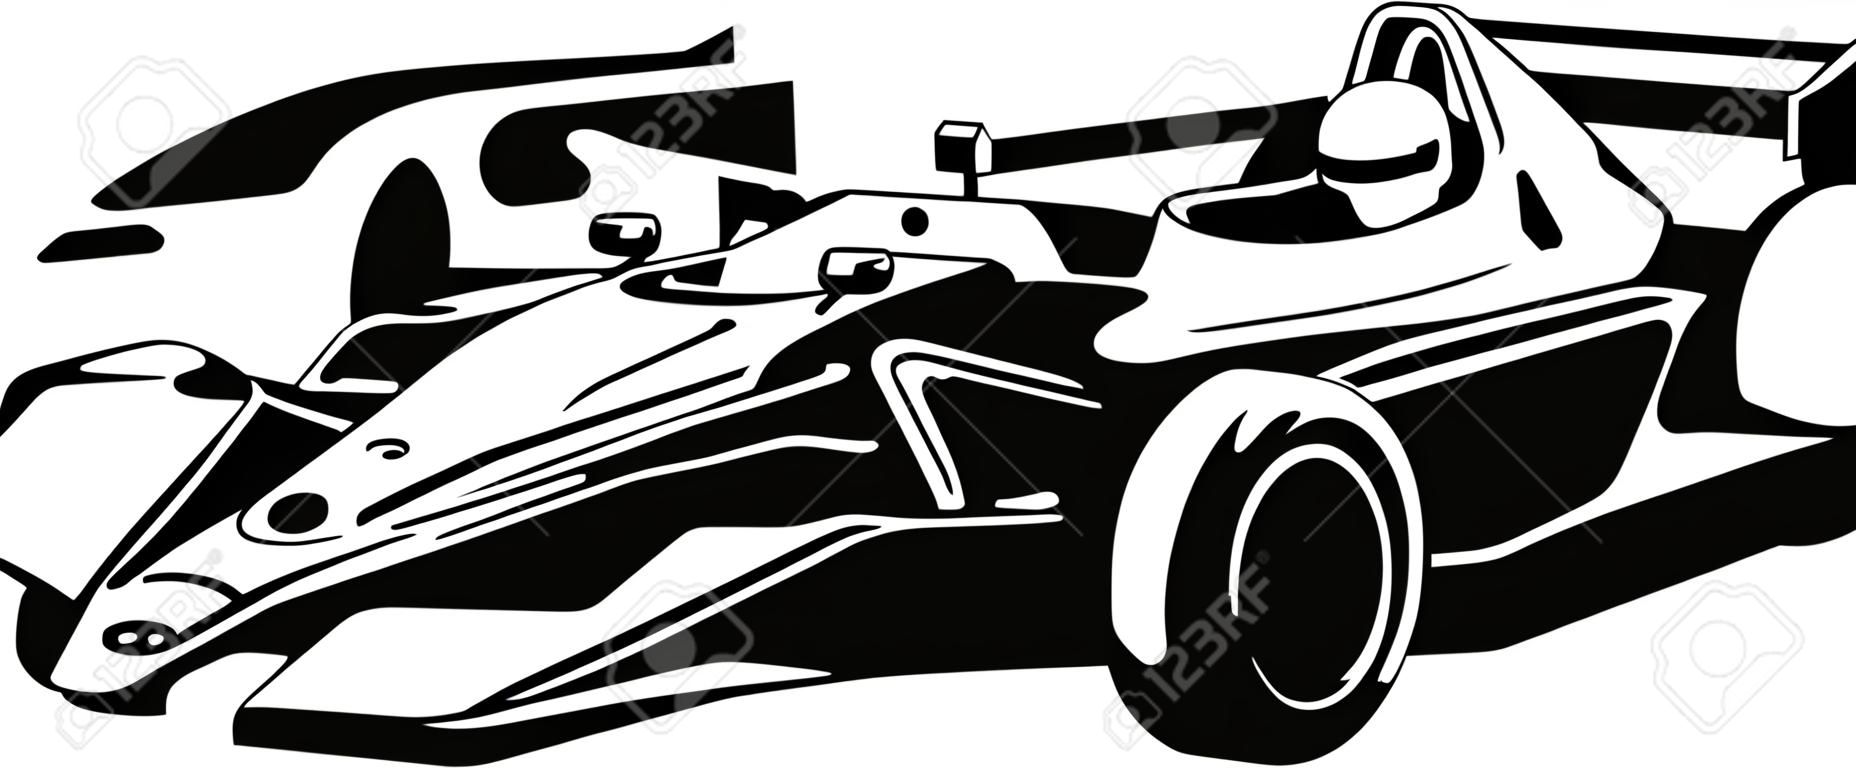 Racing Car - schwarzer Umriss Illustration, Vektor